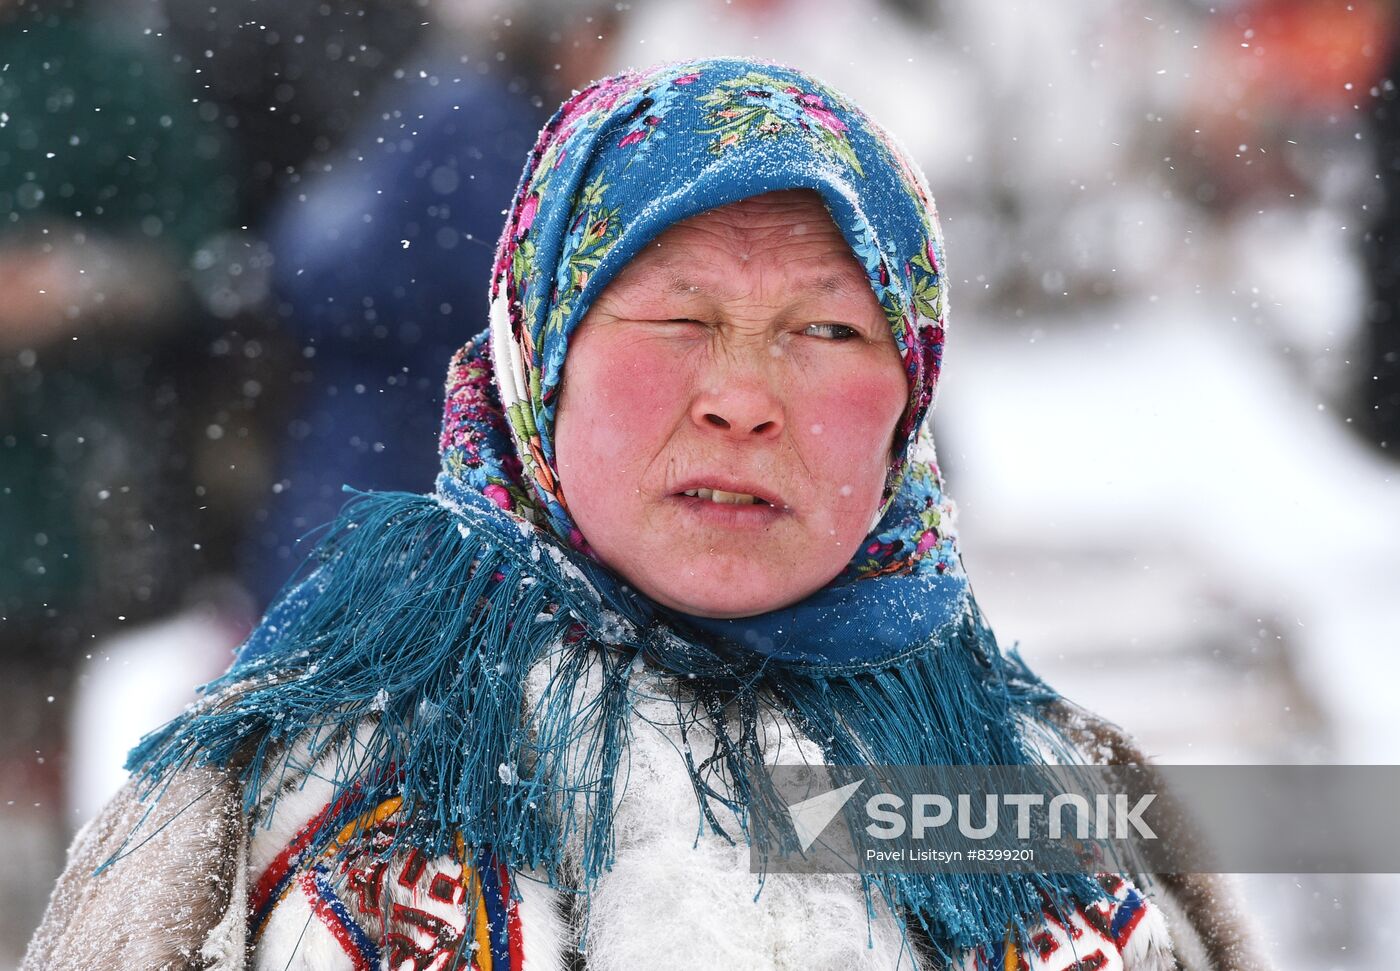 Russia Reindeer Herders' Day